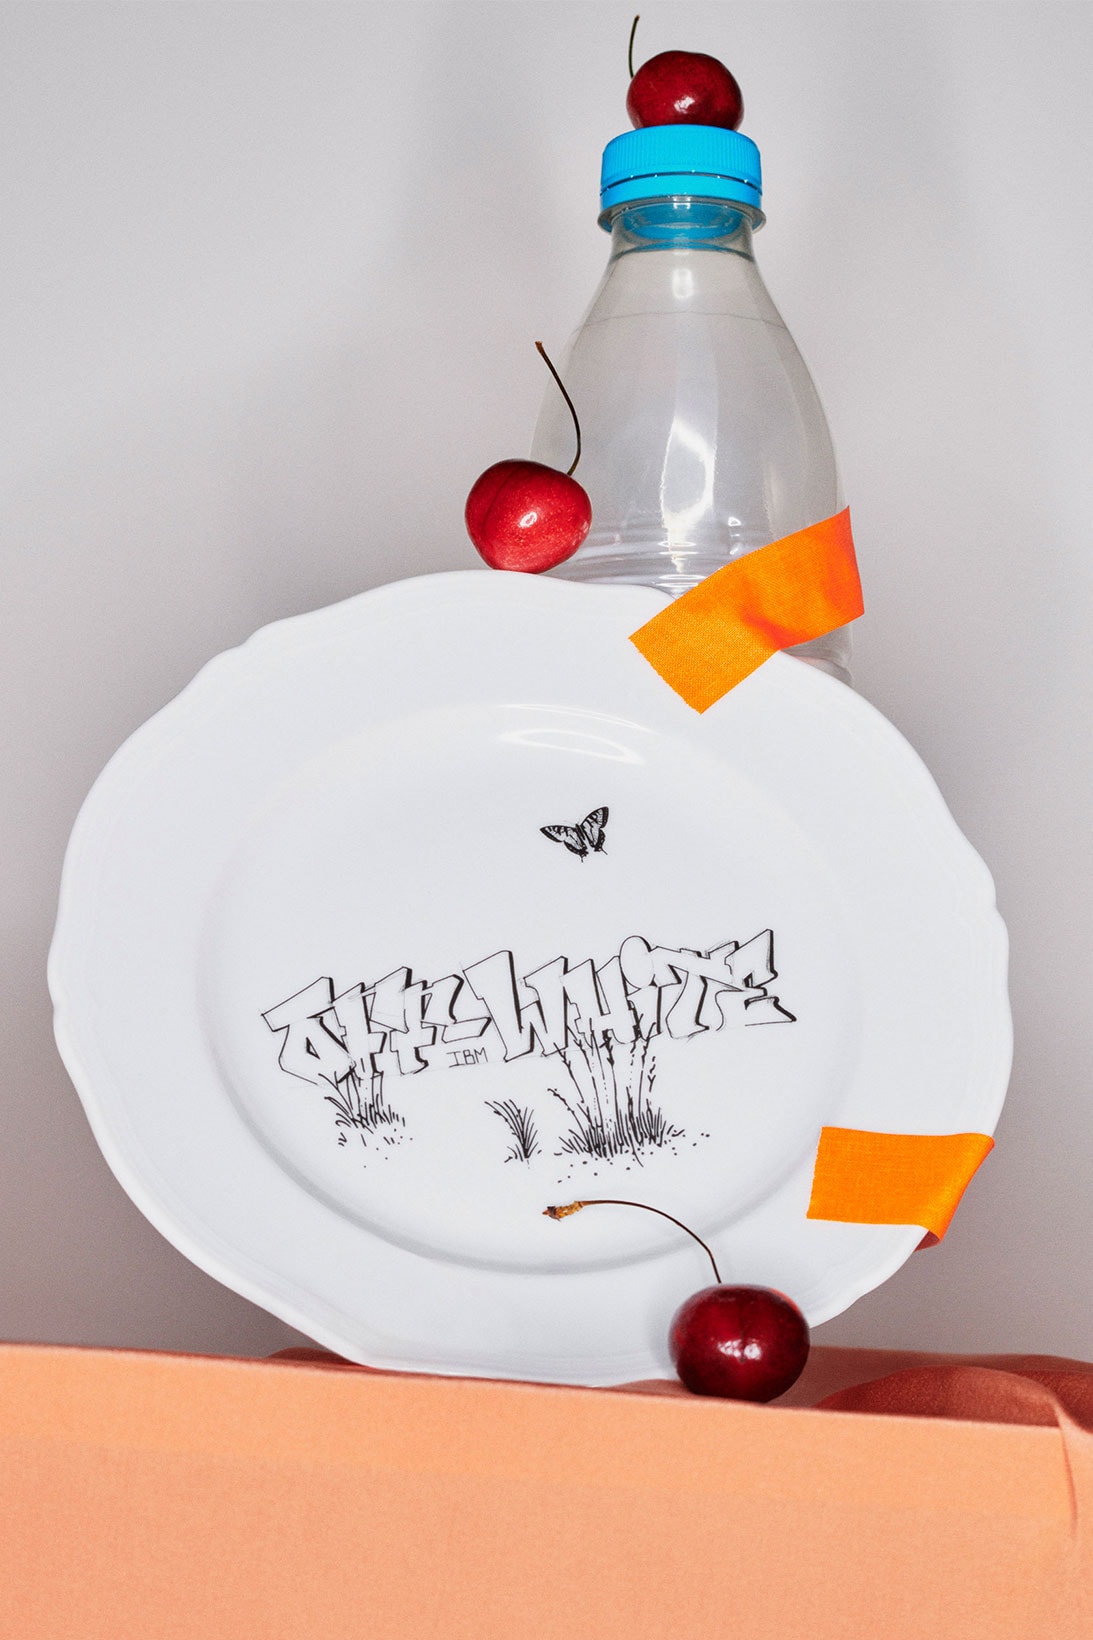 Off-White™x Ginori 1735 collection plate